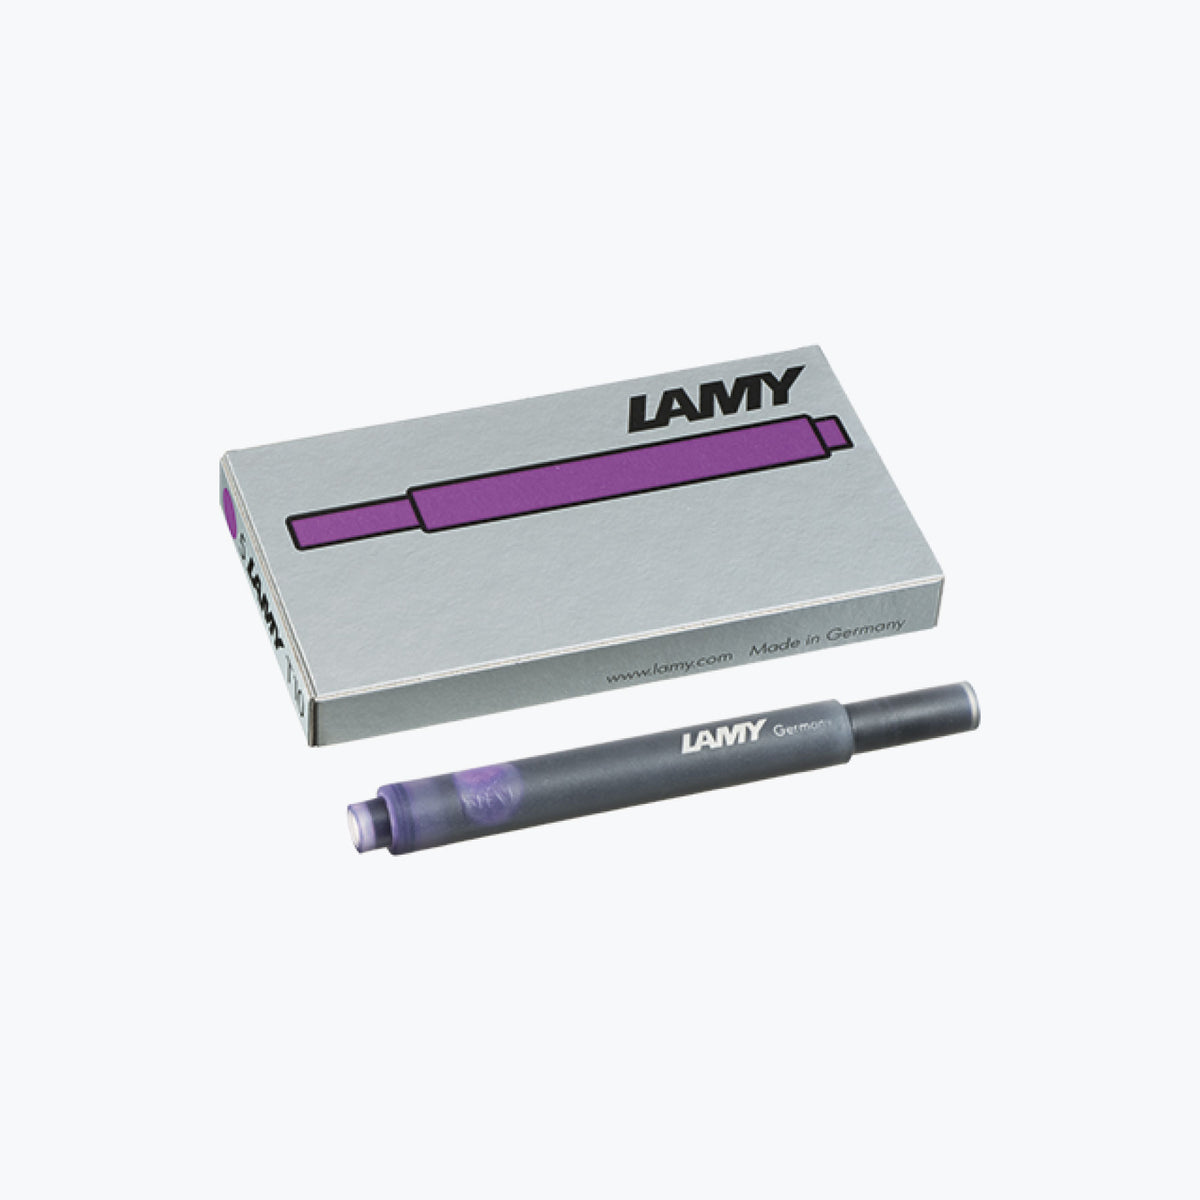 LAMY - Fountain Pen Ink - Cartridges - T10 - Violet